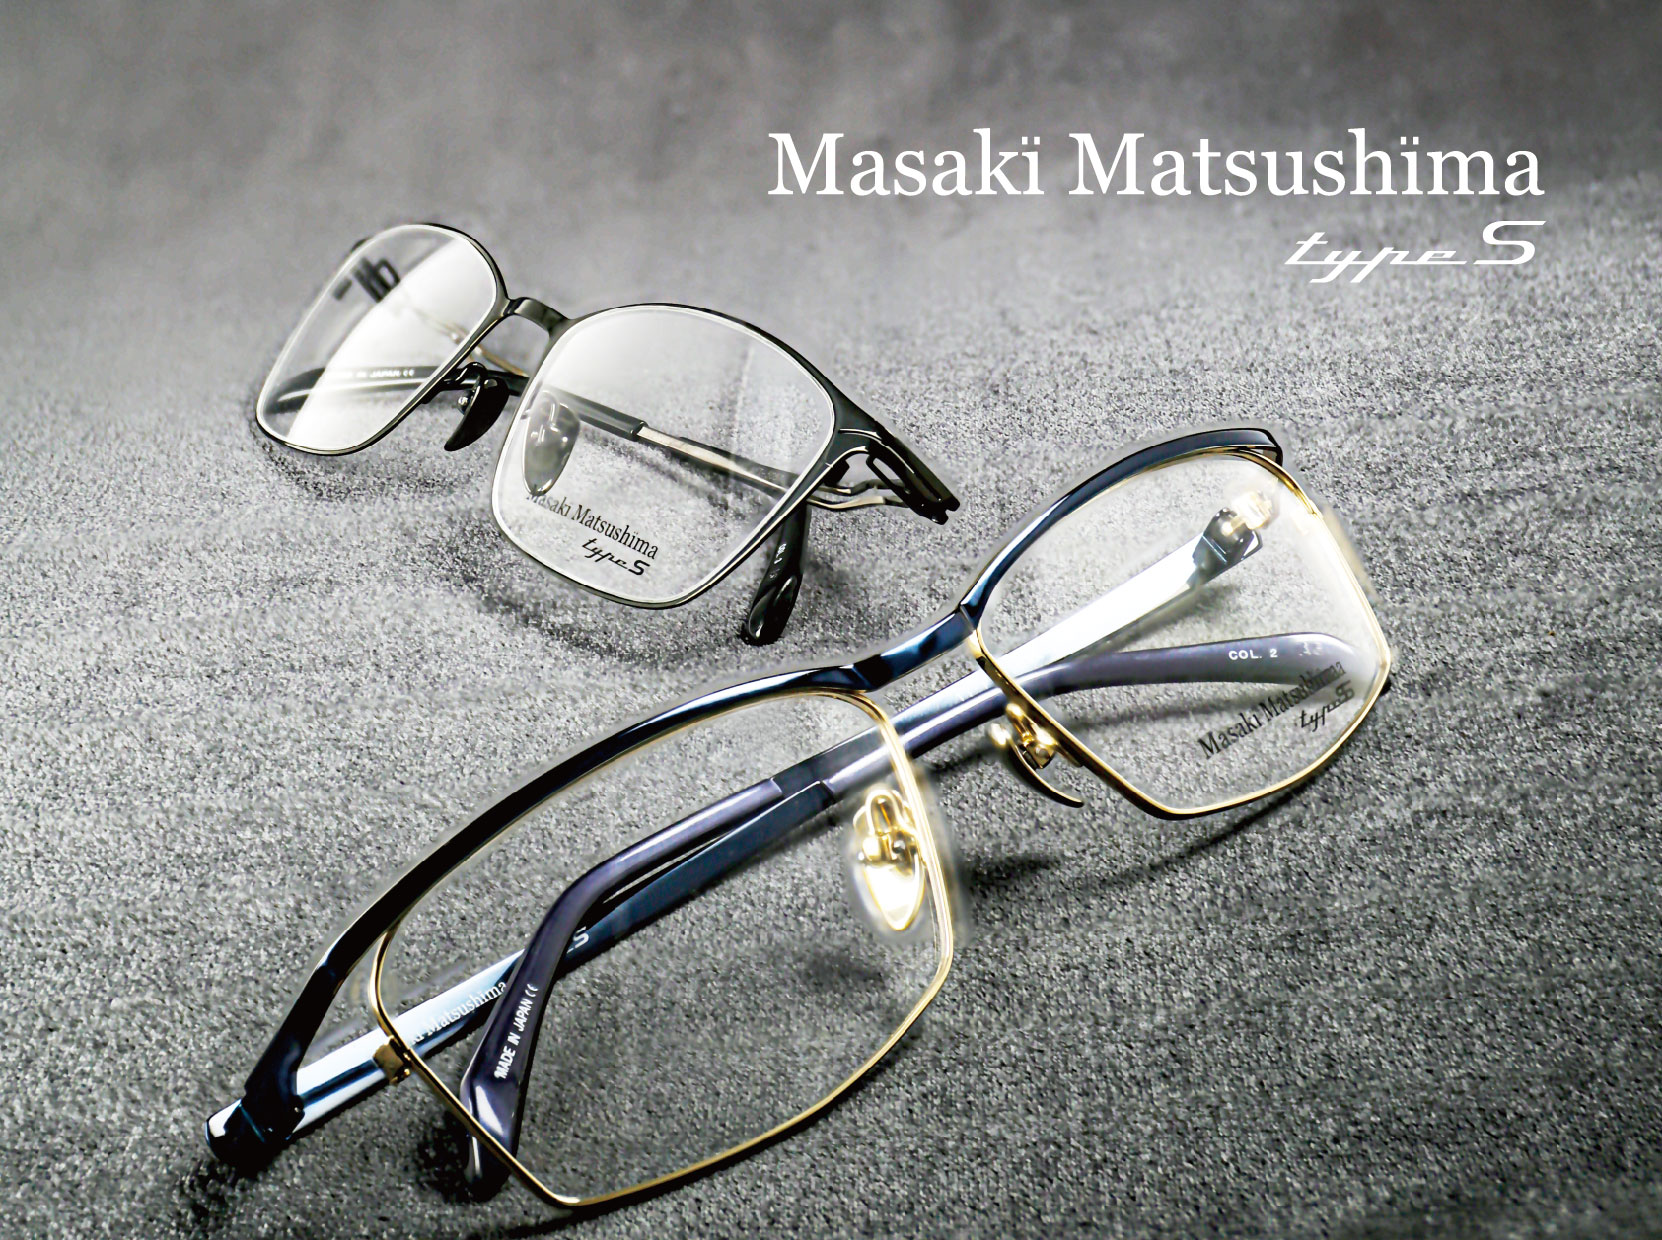 Masaki Matsushima – 清眼堂企業有限公司Miinfen Industrial Inc.